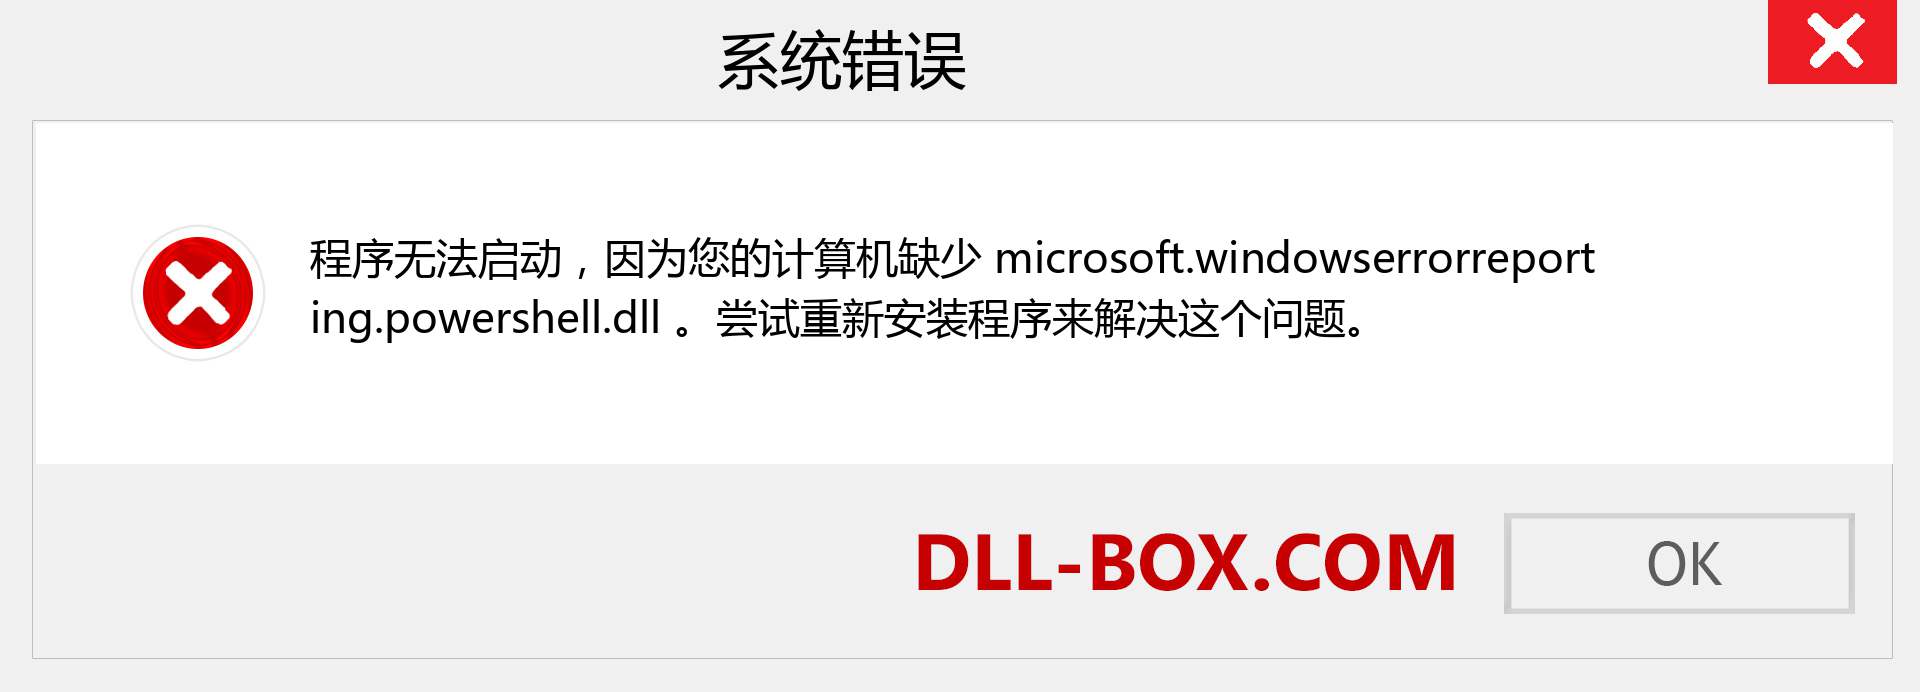 microsoft.windowserrorreporting.powershell.dll 文件丢失？。 适用于 Windows 7、8、10 的下载 - 修复 Windows、照片、图像上的 microsoft.windowserrorreporting.powershell dll 丢失错误